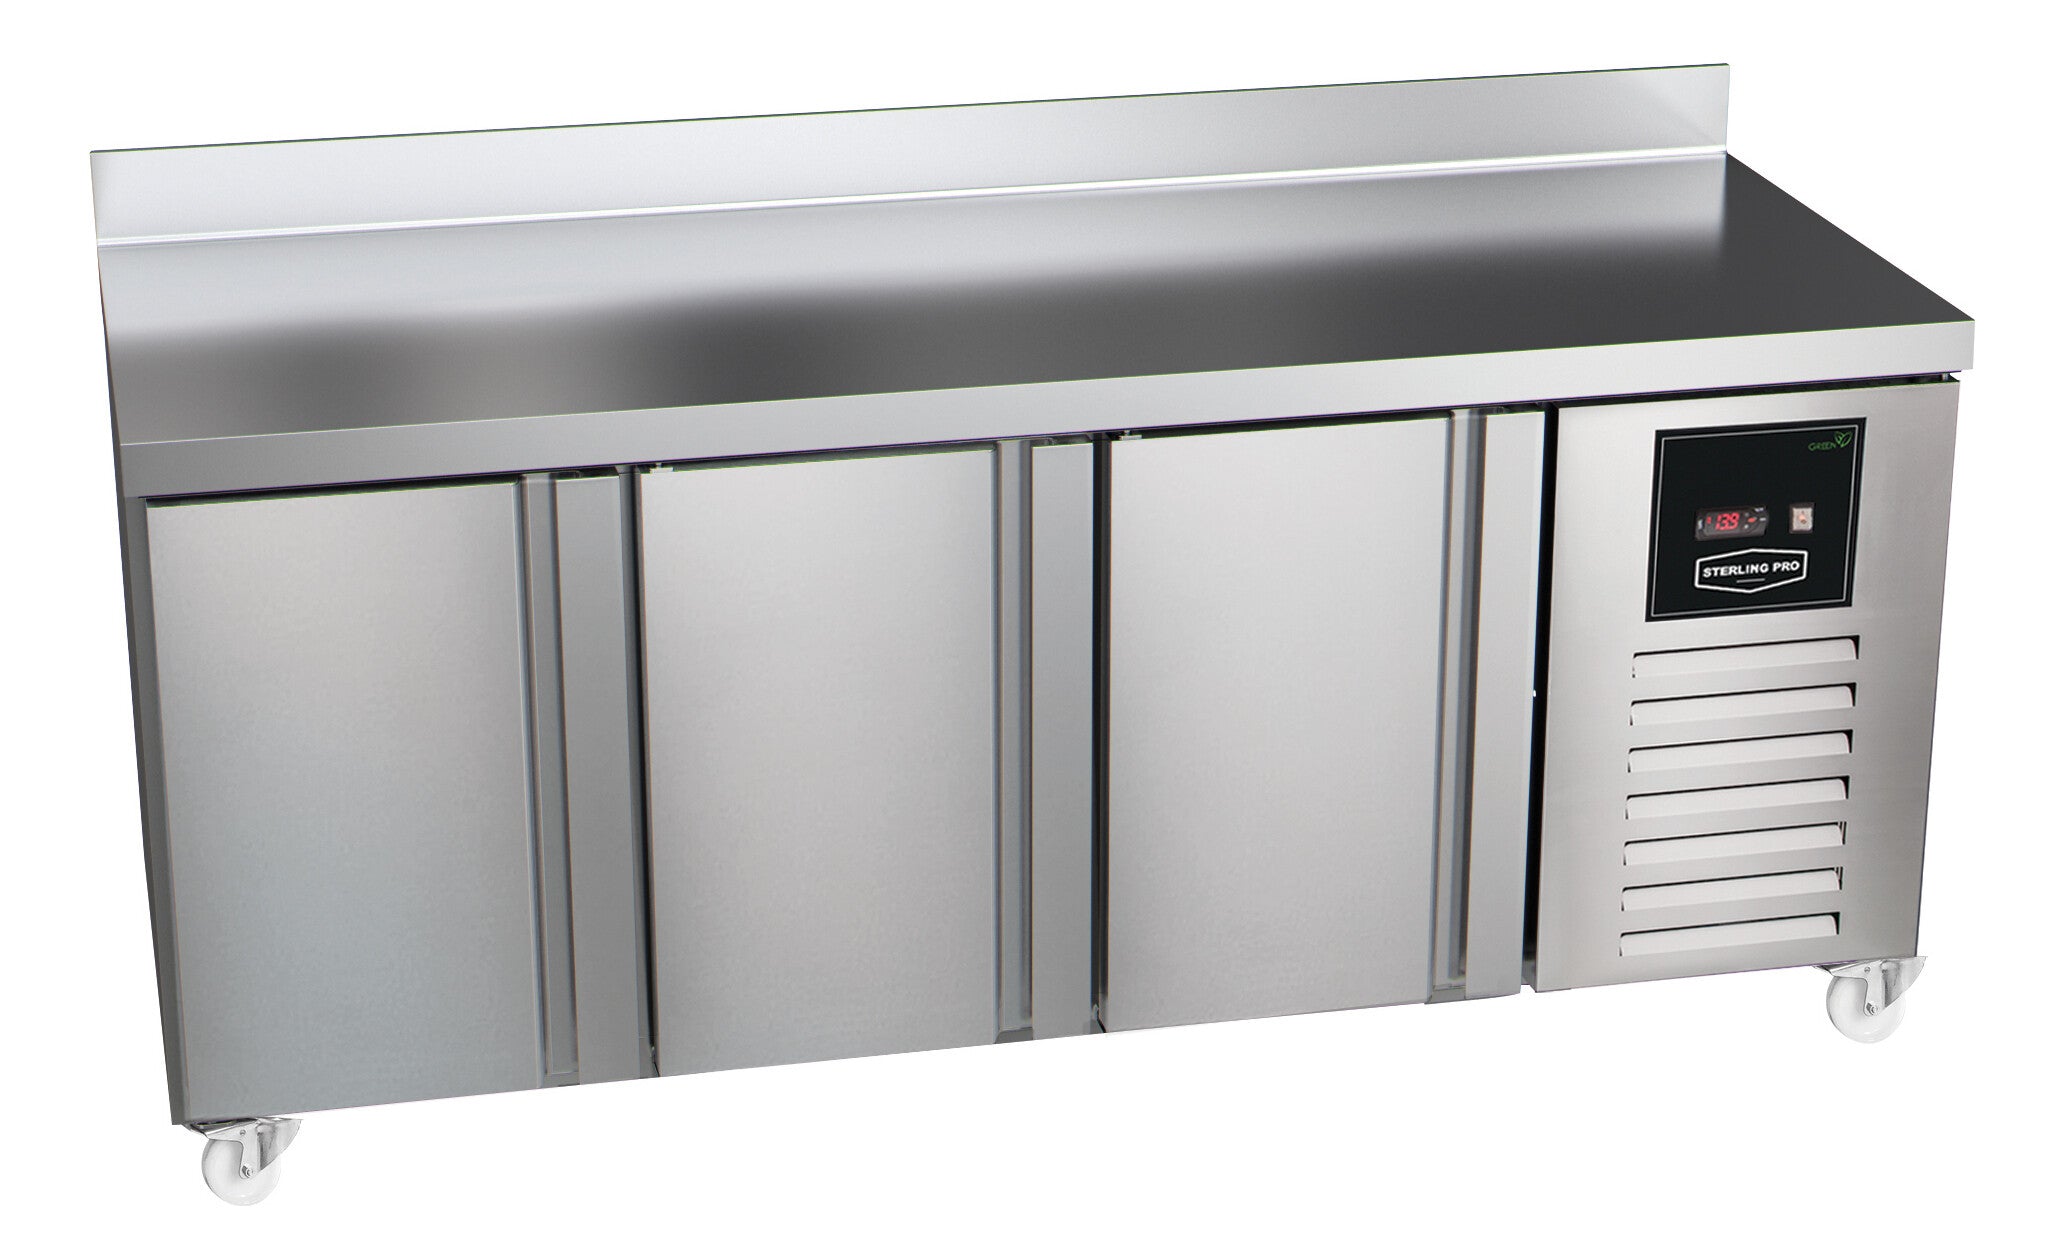 Sterling Pro Green SNI-7-180-30-SB 3 Door Counter Freezer with 100mm Splashback 452 Litres